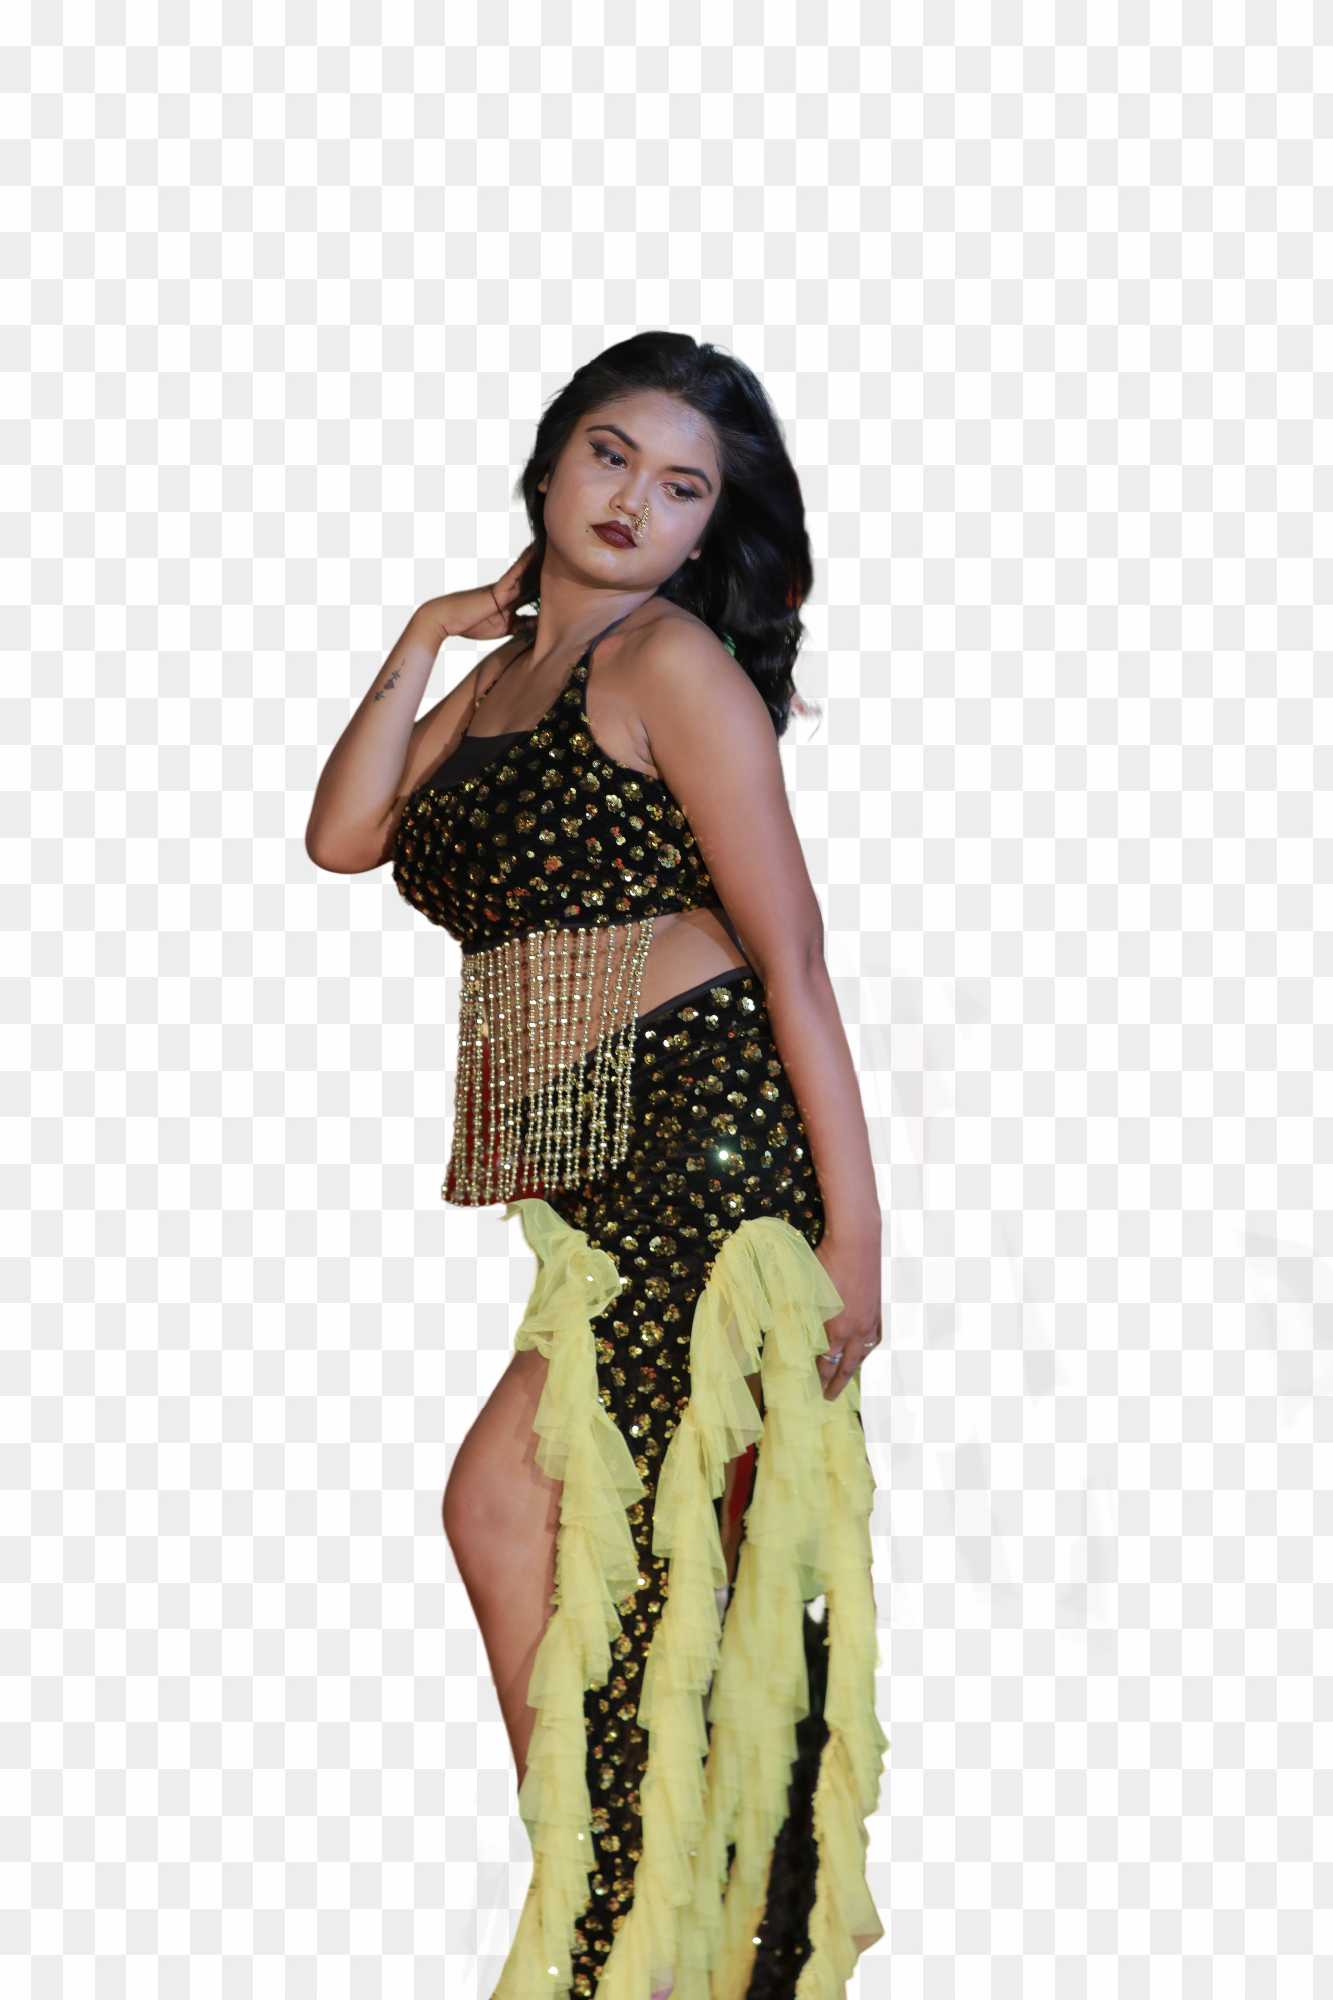 Muskan actress PNG photo download